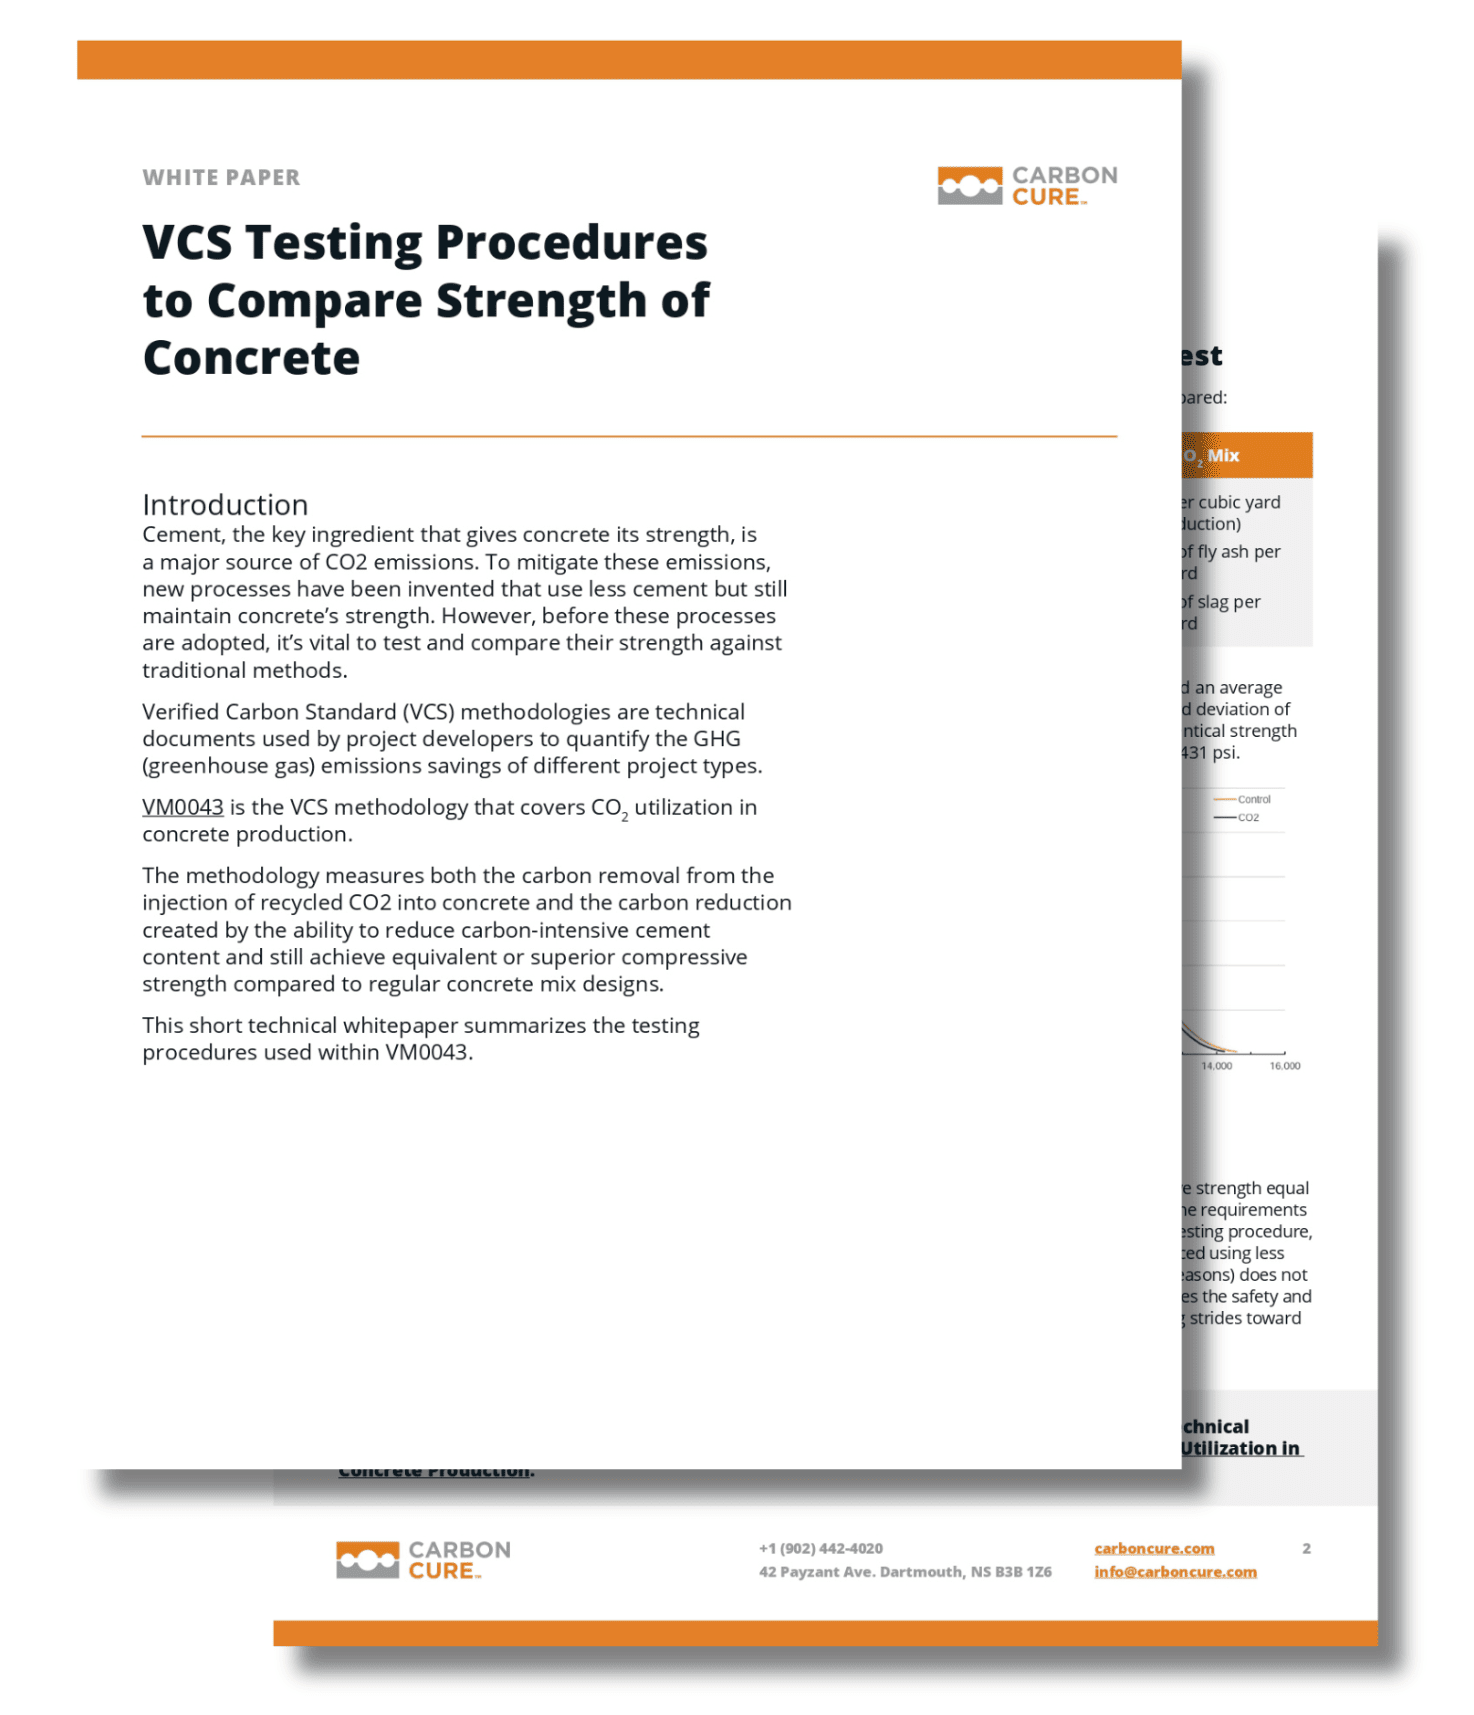 VCS Testing Procedures to Compare Strength of Concrete